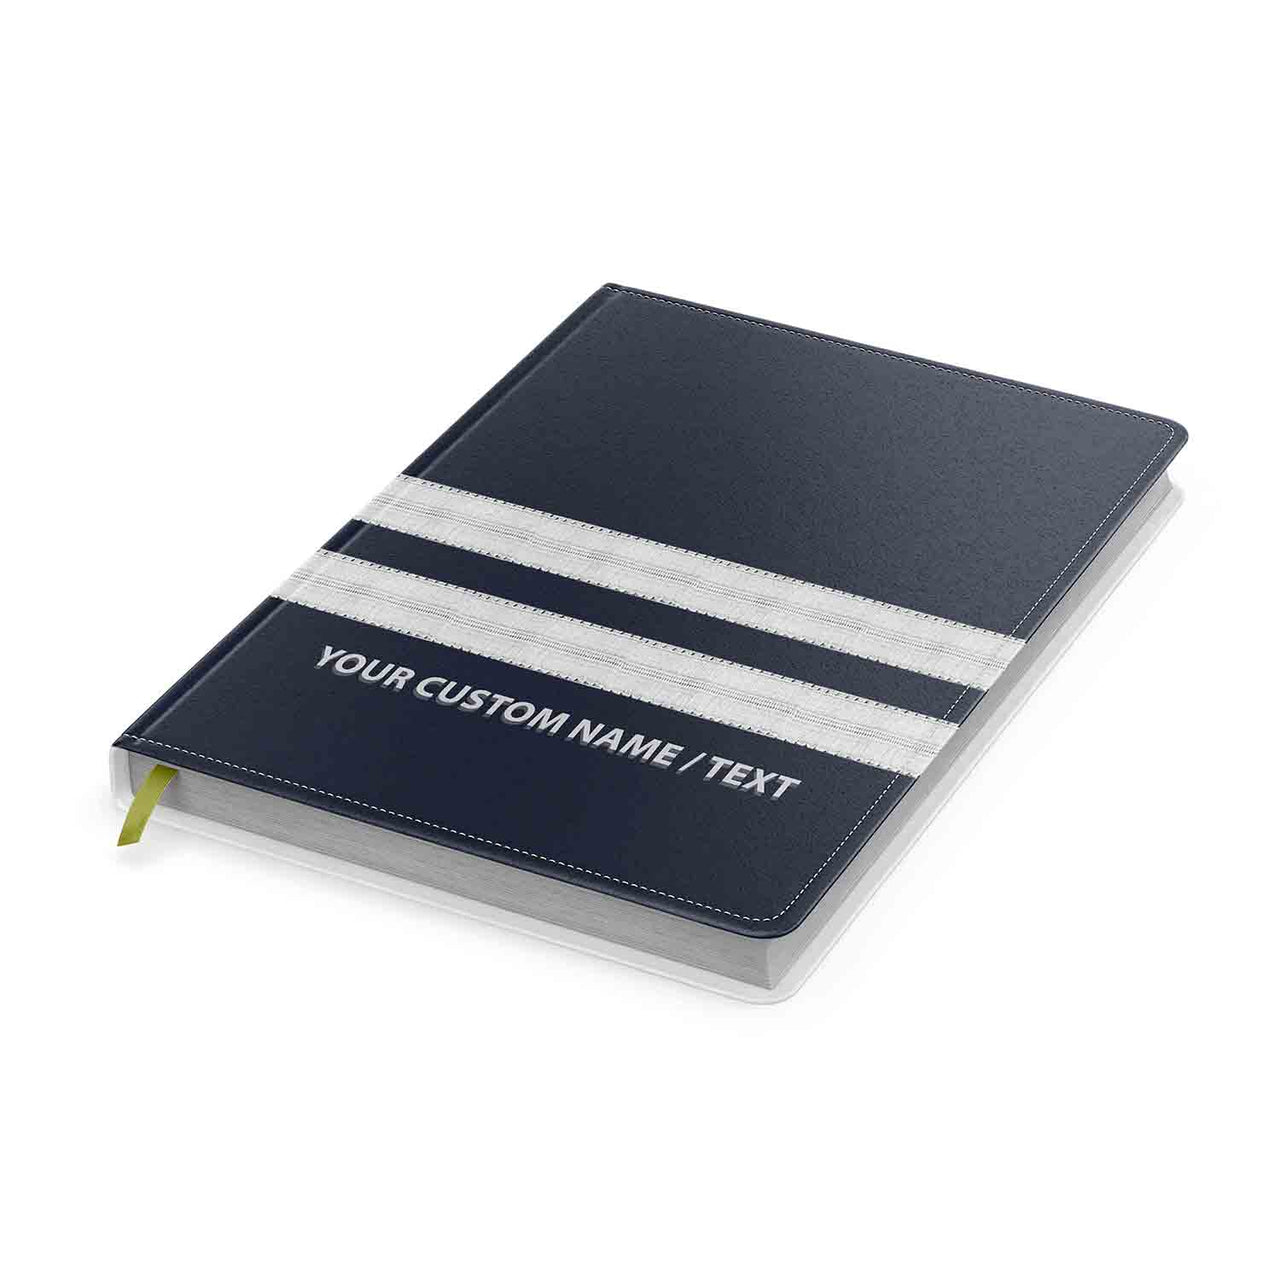 Customizable Name & "SILVER" Pilot Epaulette (4,3,2 Lines) Designed Notebooks